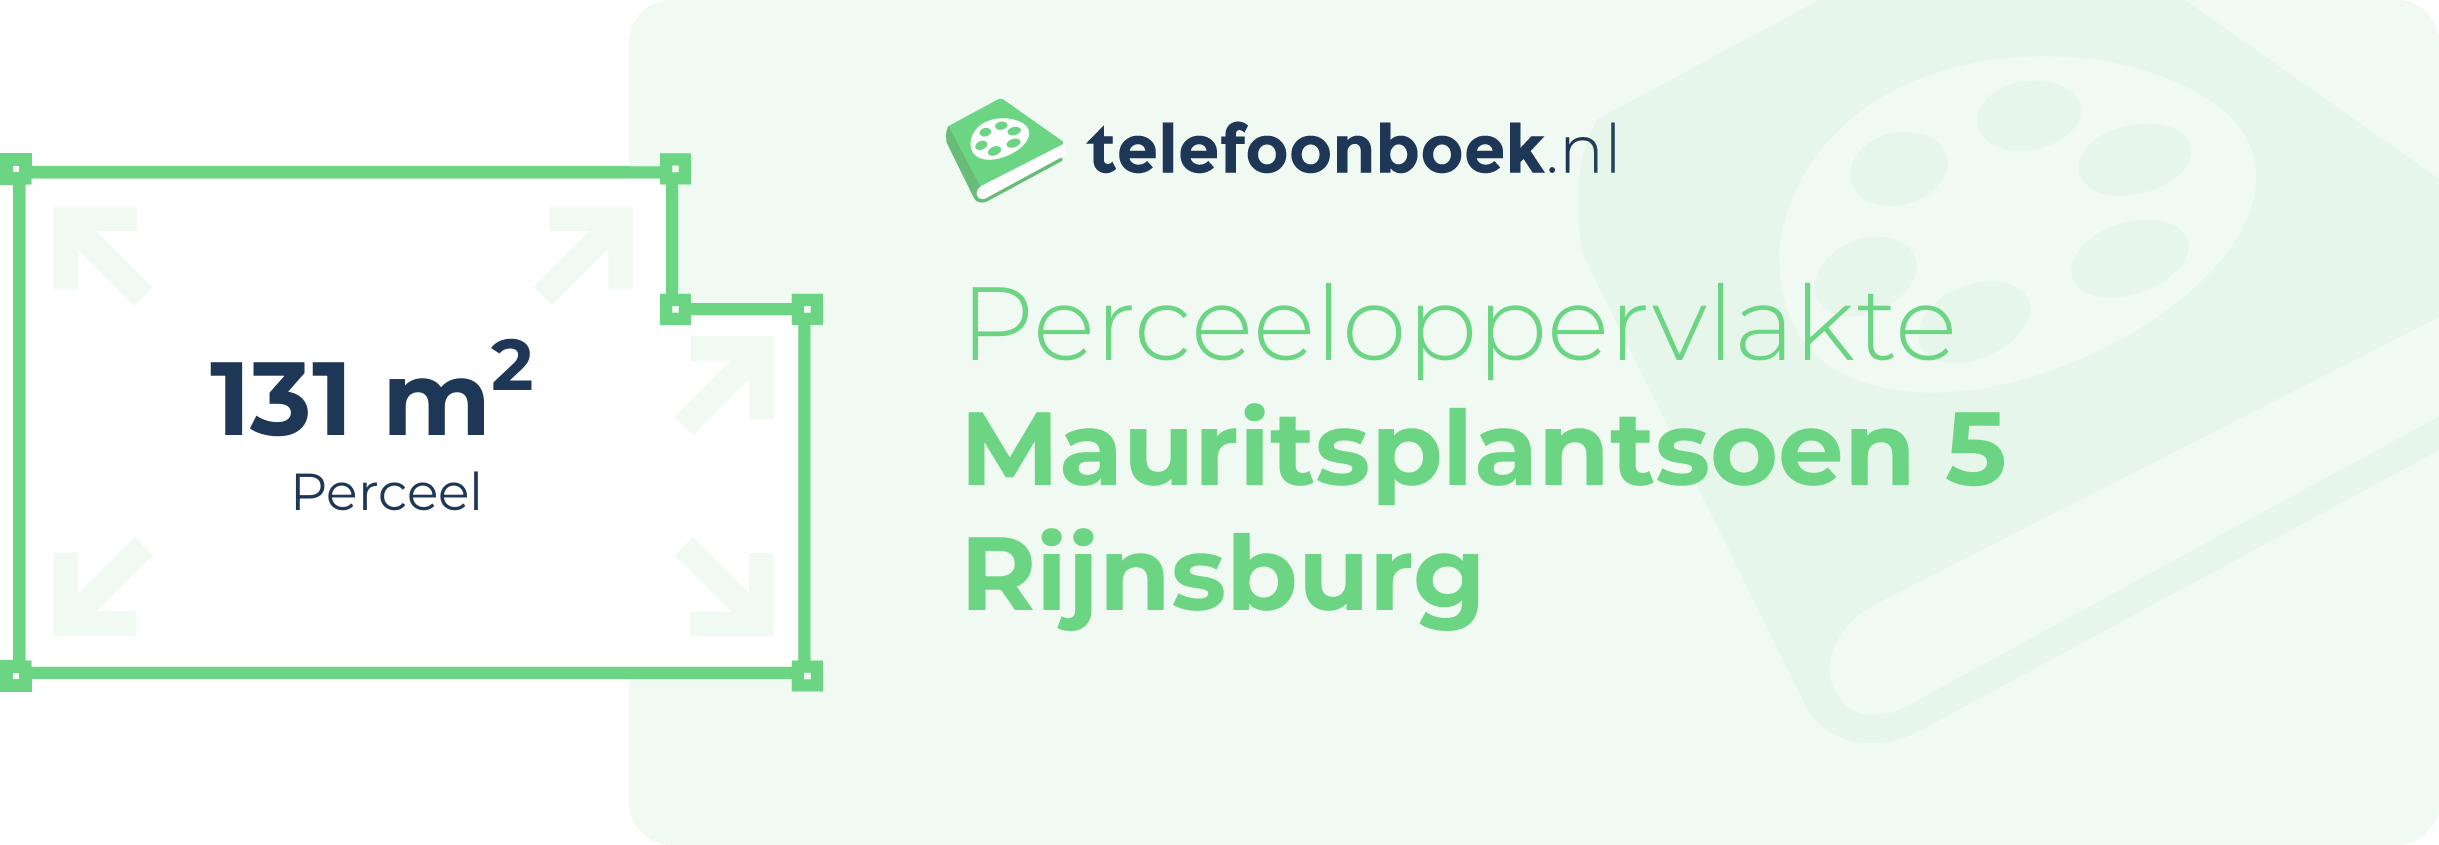 Perceeloppervlakte Mauritsplantsoen 5 Rijnsburg